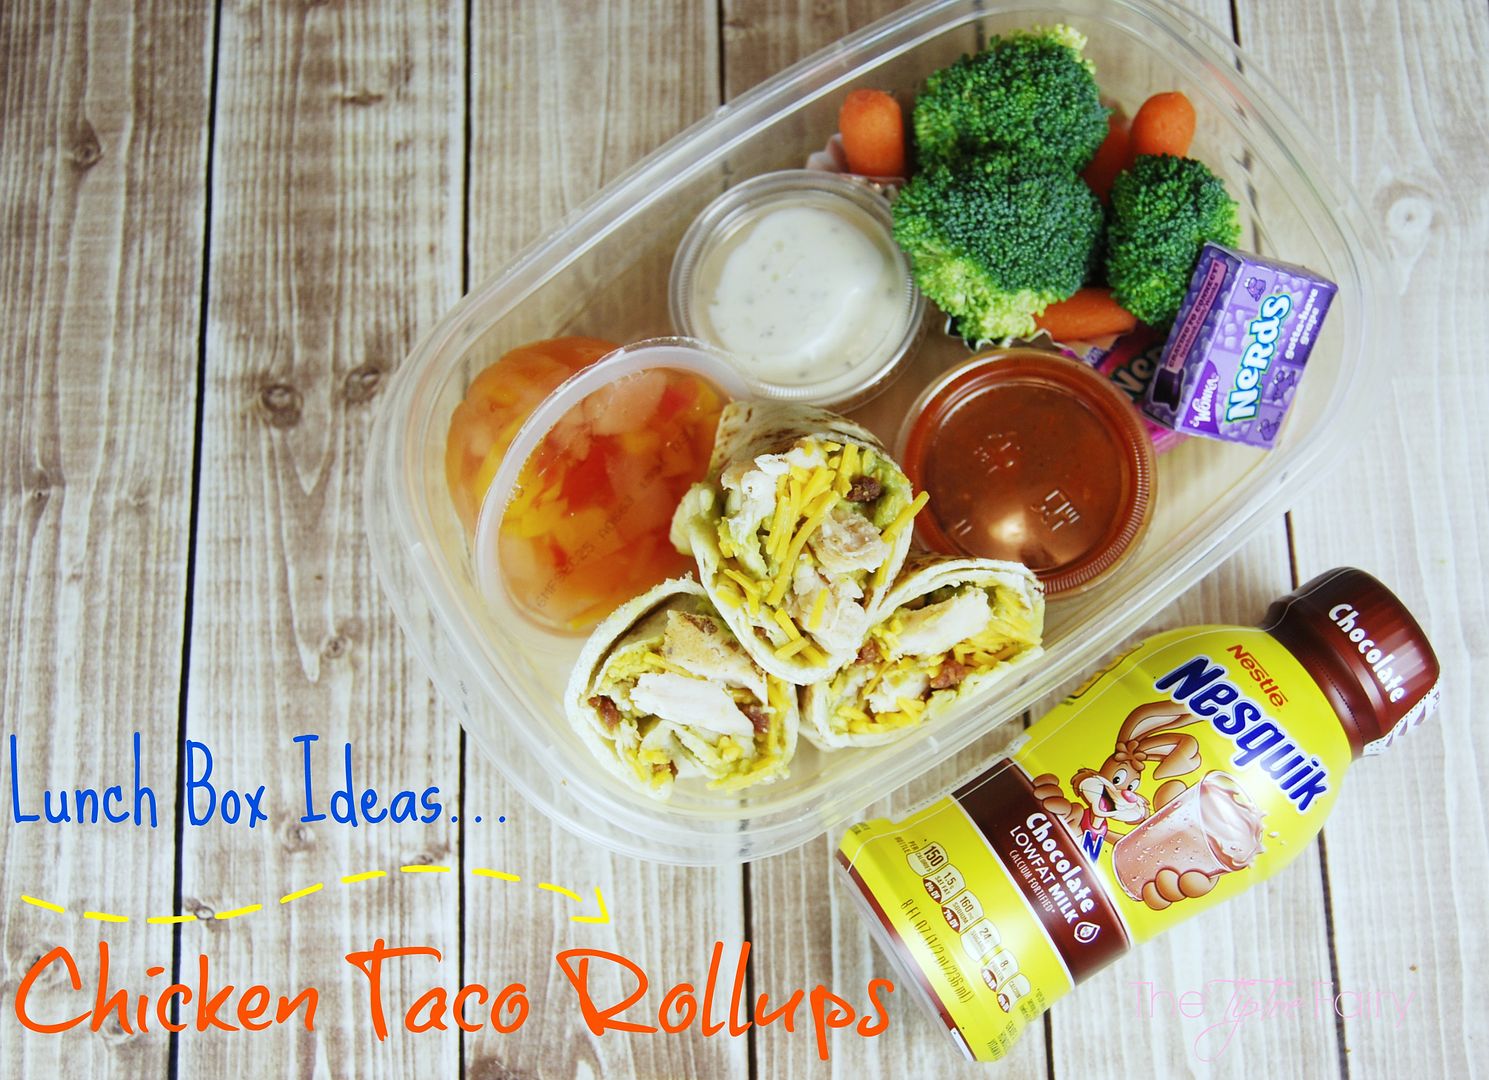 Lunch Box Ideas - Chicken Taco Roll Ups | The TipToe Fairy #MyGoodLife #shop #chickenrecipes #lunchboxideas #lunchideas